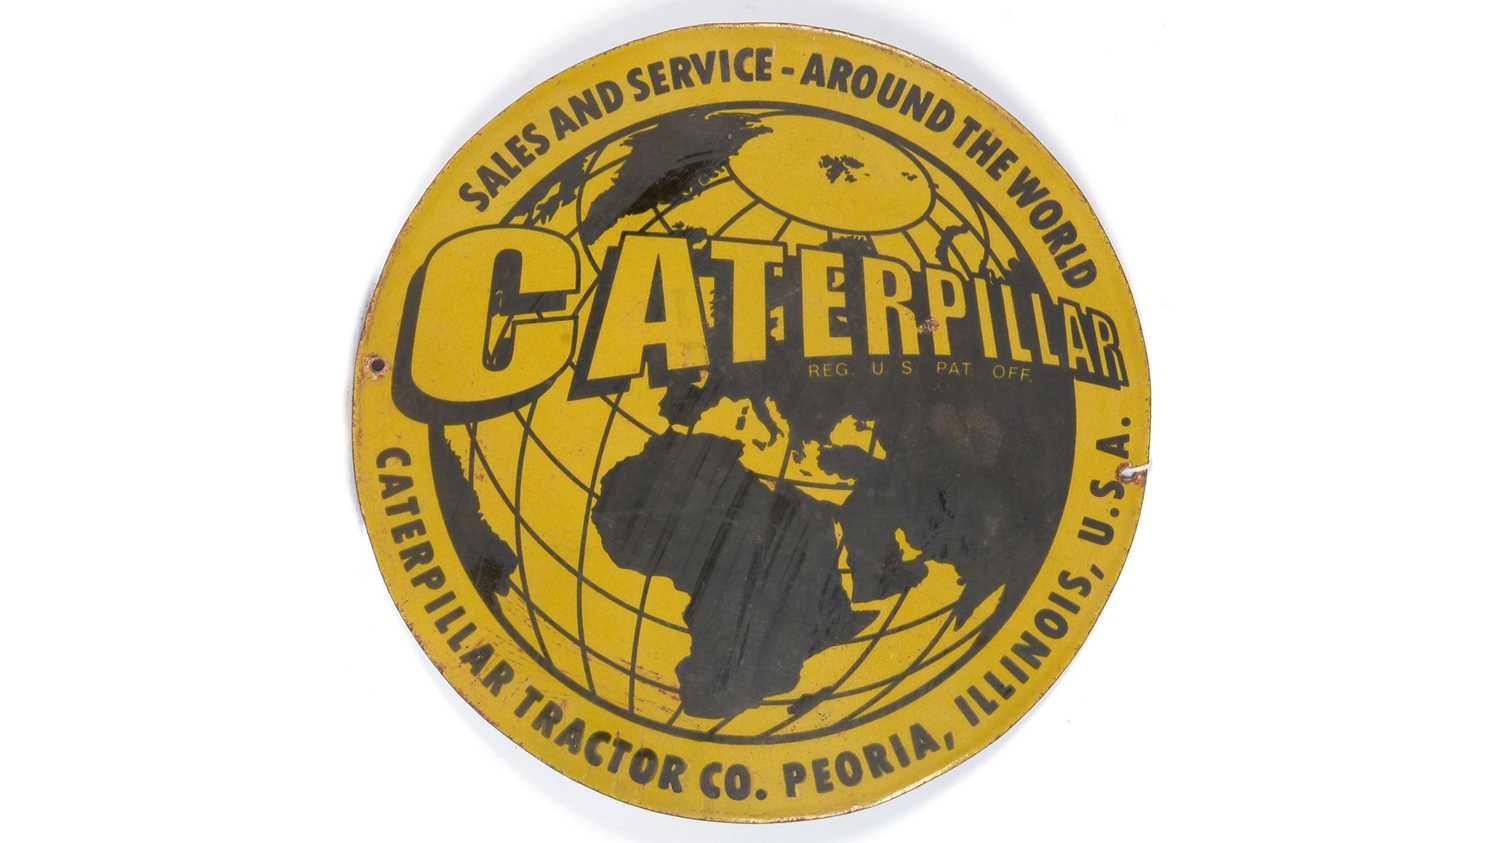 Caterpillar enamel advertising sign